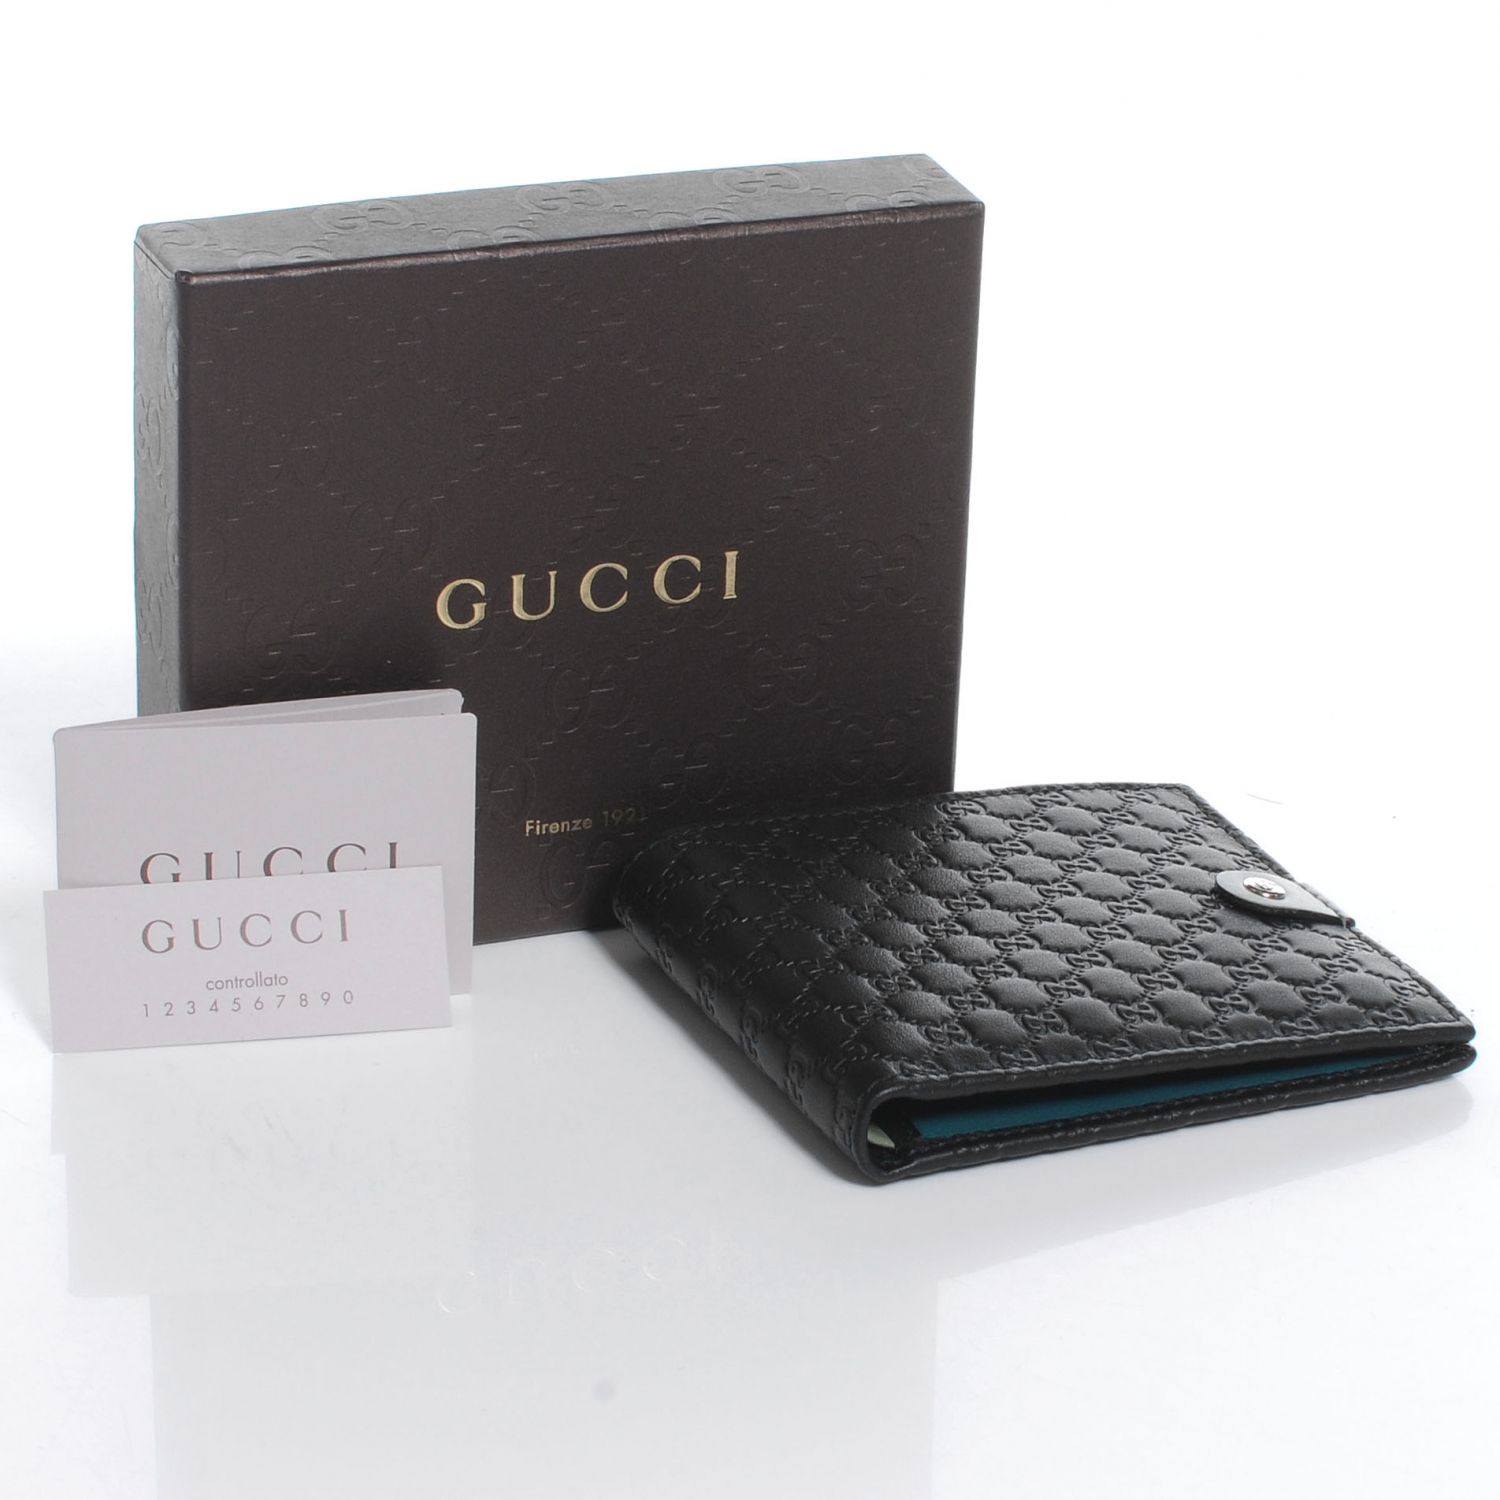 GUCCI Guccissima Mens Bi-Fold Wallet Black 50118